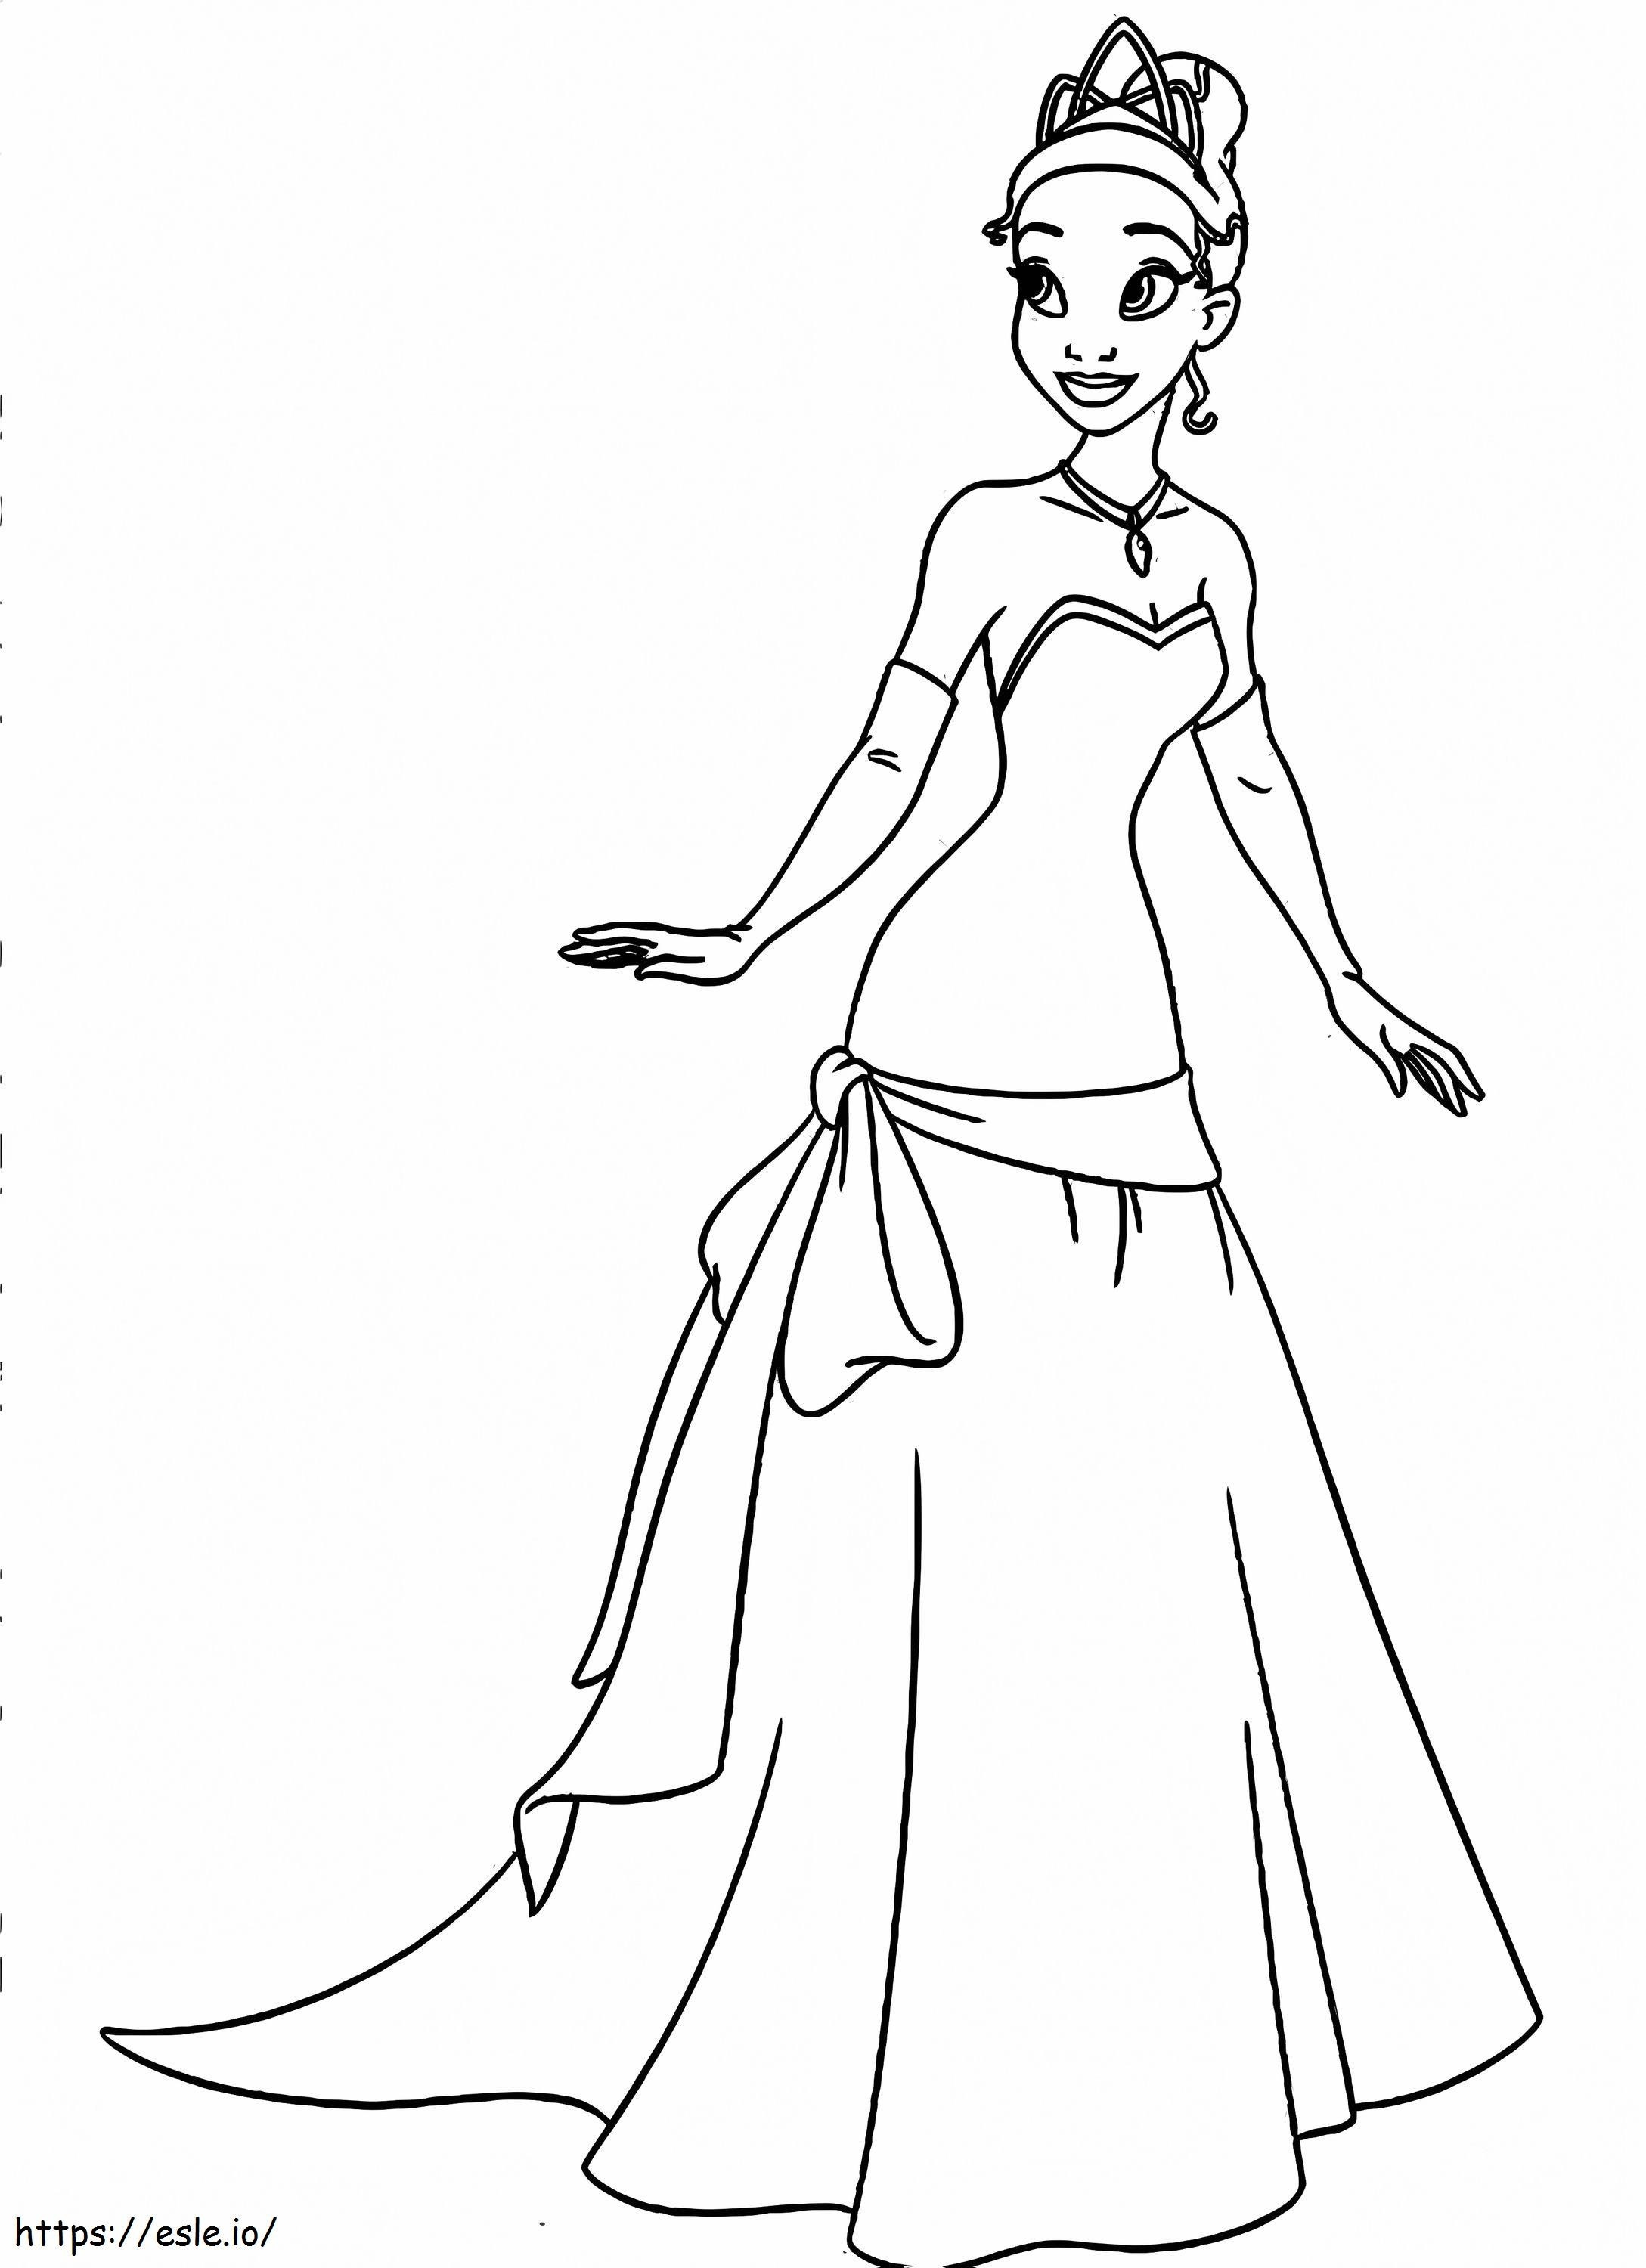 Beautiful Princess Tiana coloring page